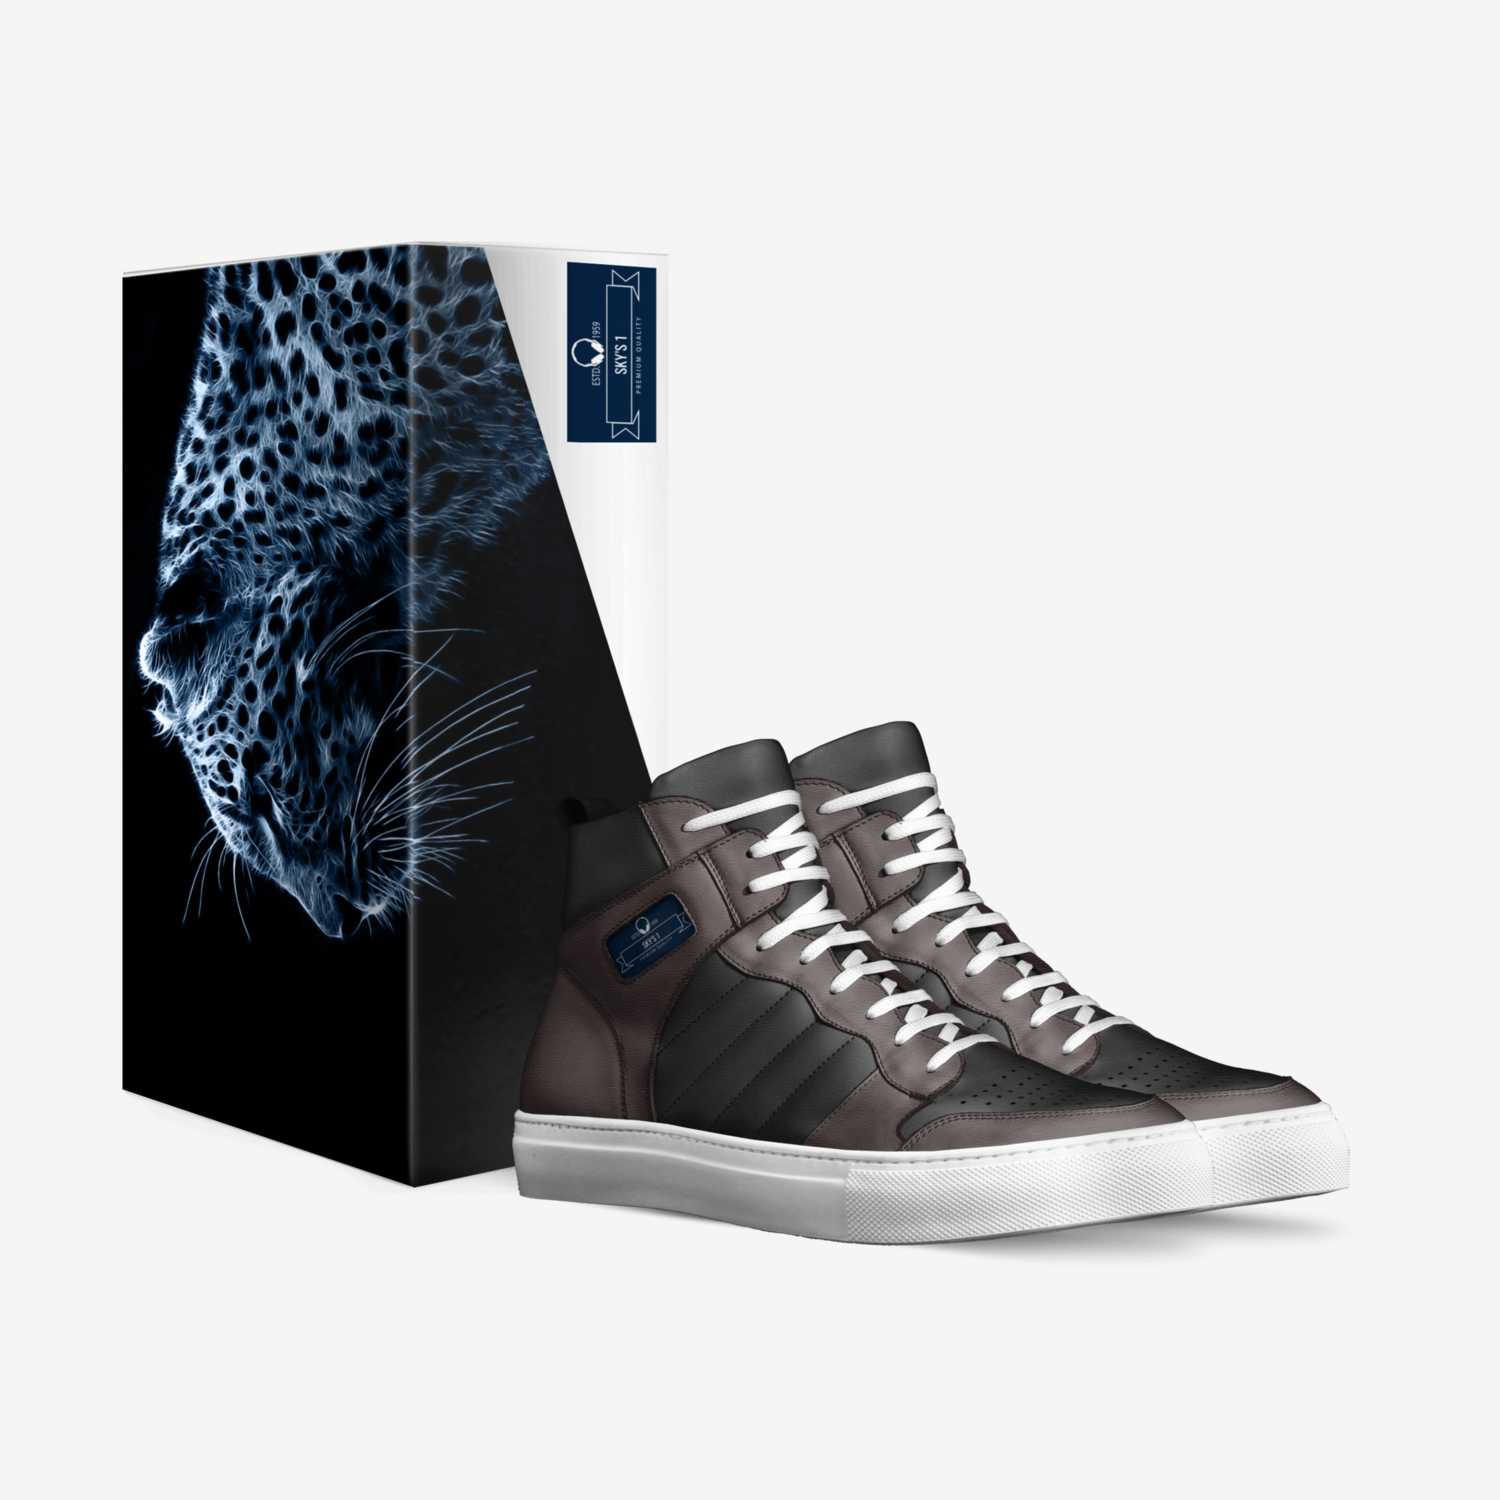 Sky’s 1 custom made in Italy shoes by Joshua Jordan | Box view